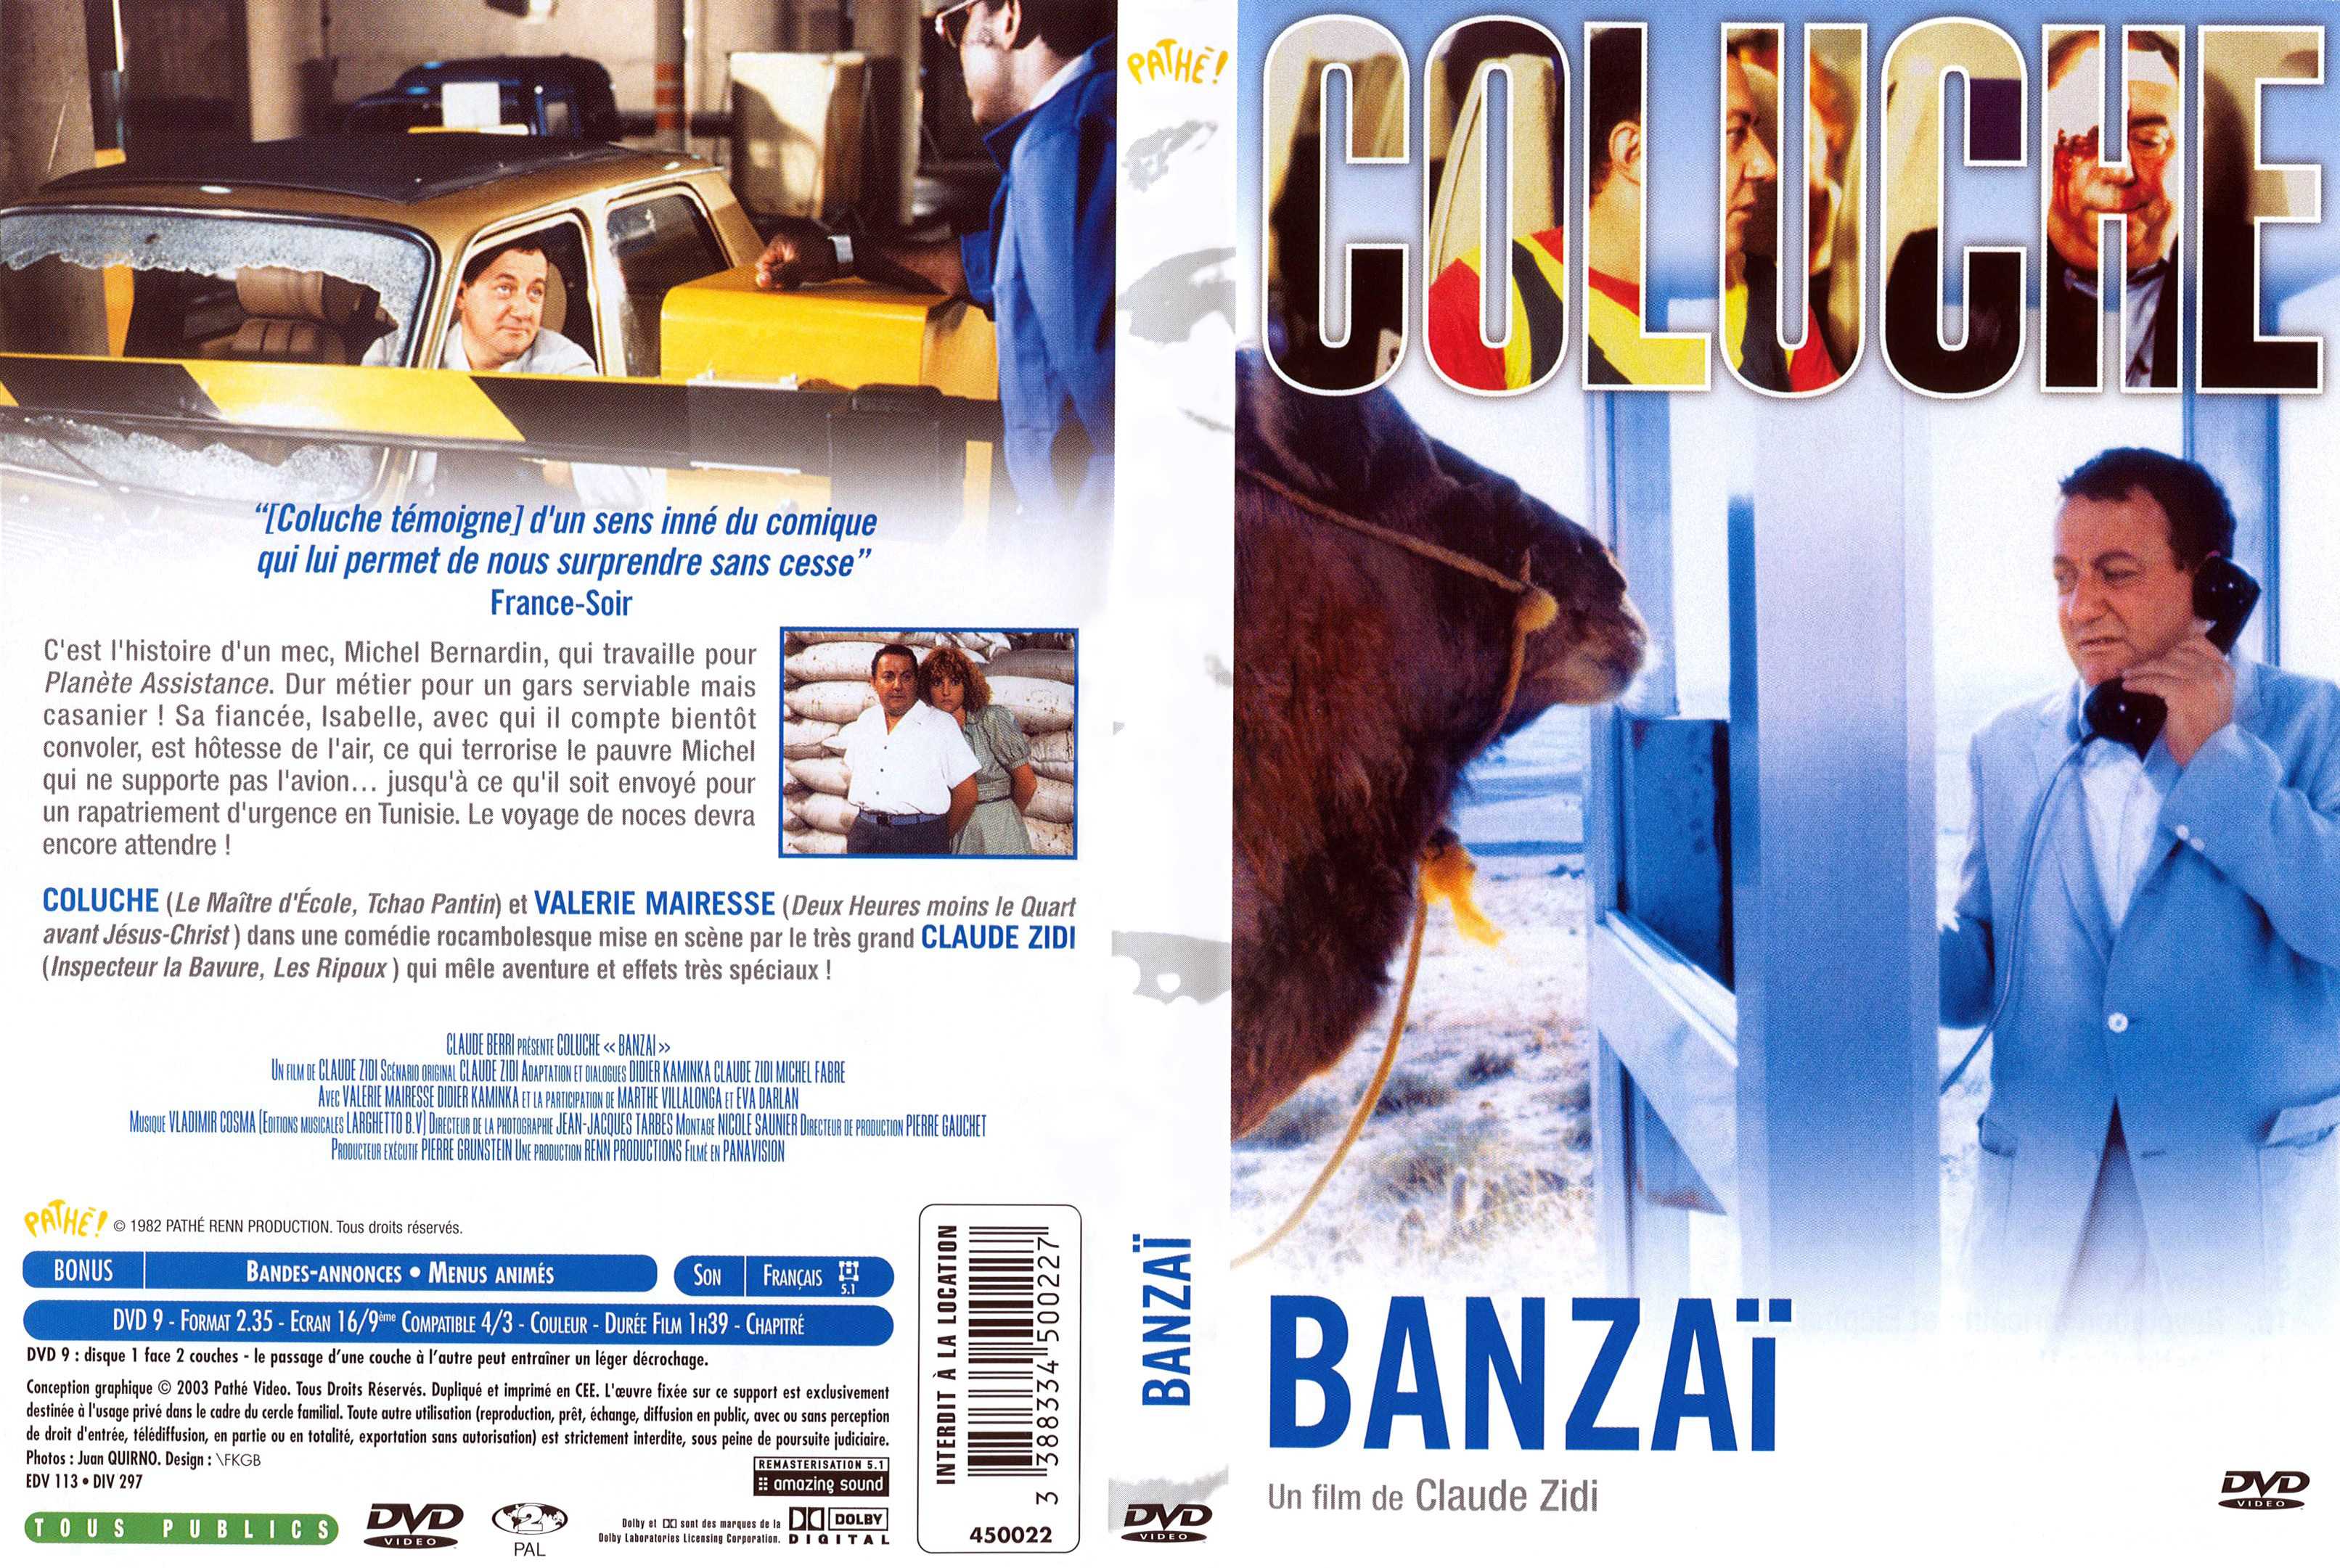 Jaquette DVD Banzai v2